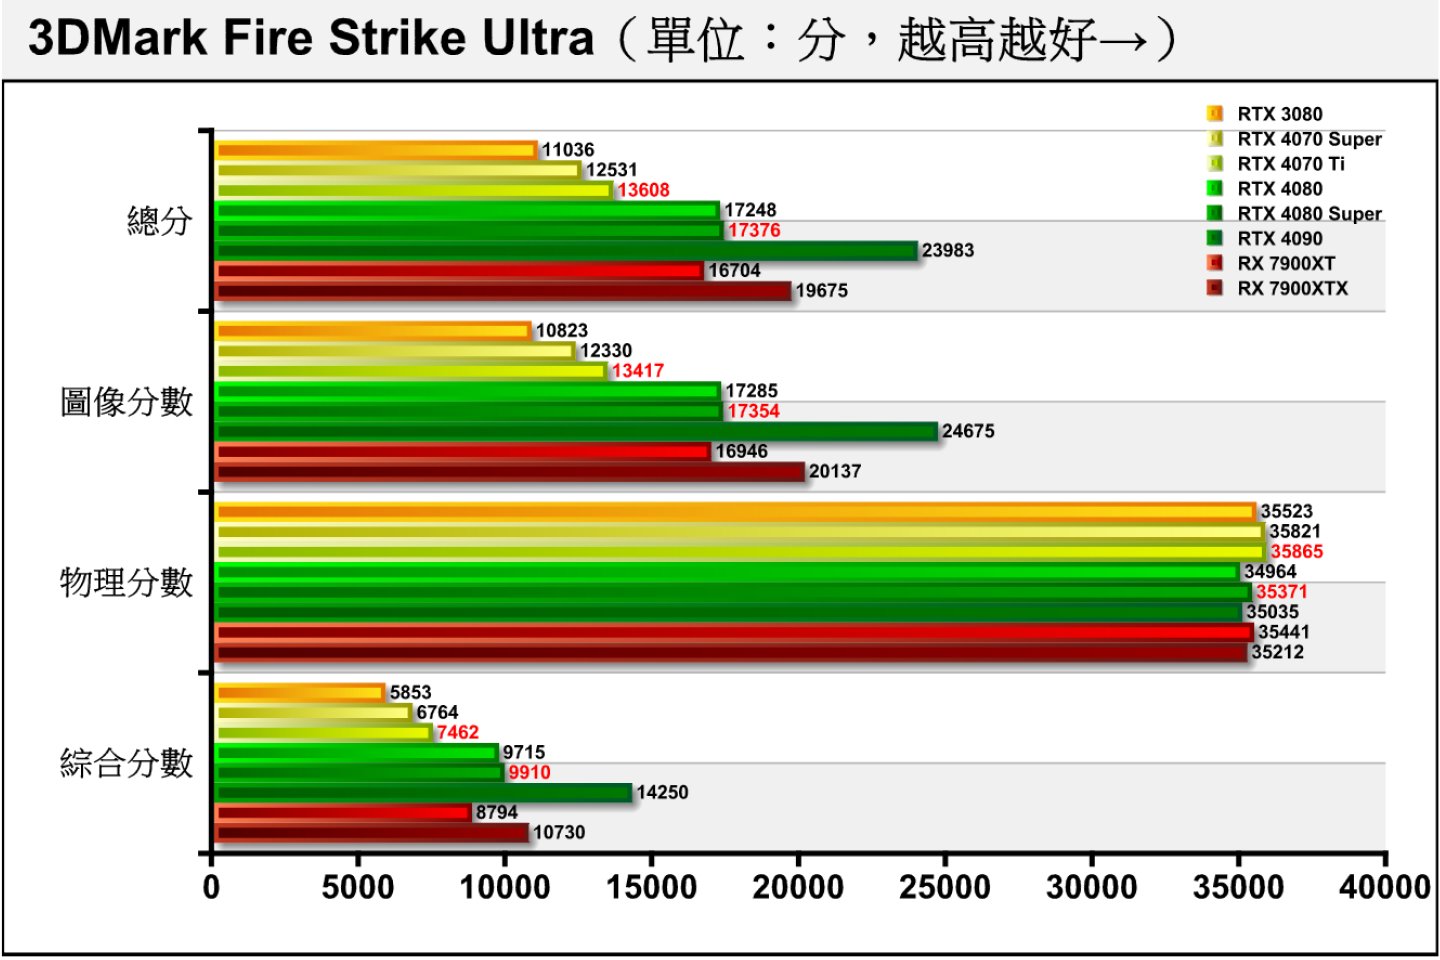 Fire Strike Ultra進一將解析度提升至4K（3840 x 2160），RTX 4080 Super的圖像分數以小幅度領先RTX 4080。